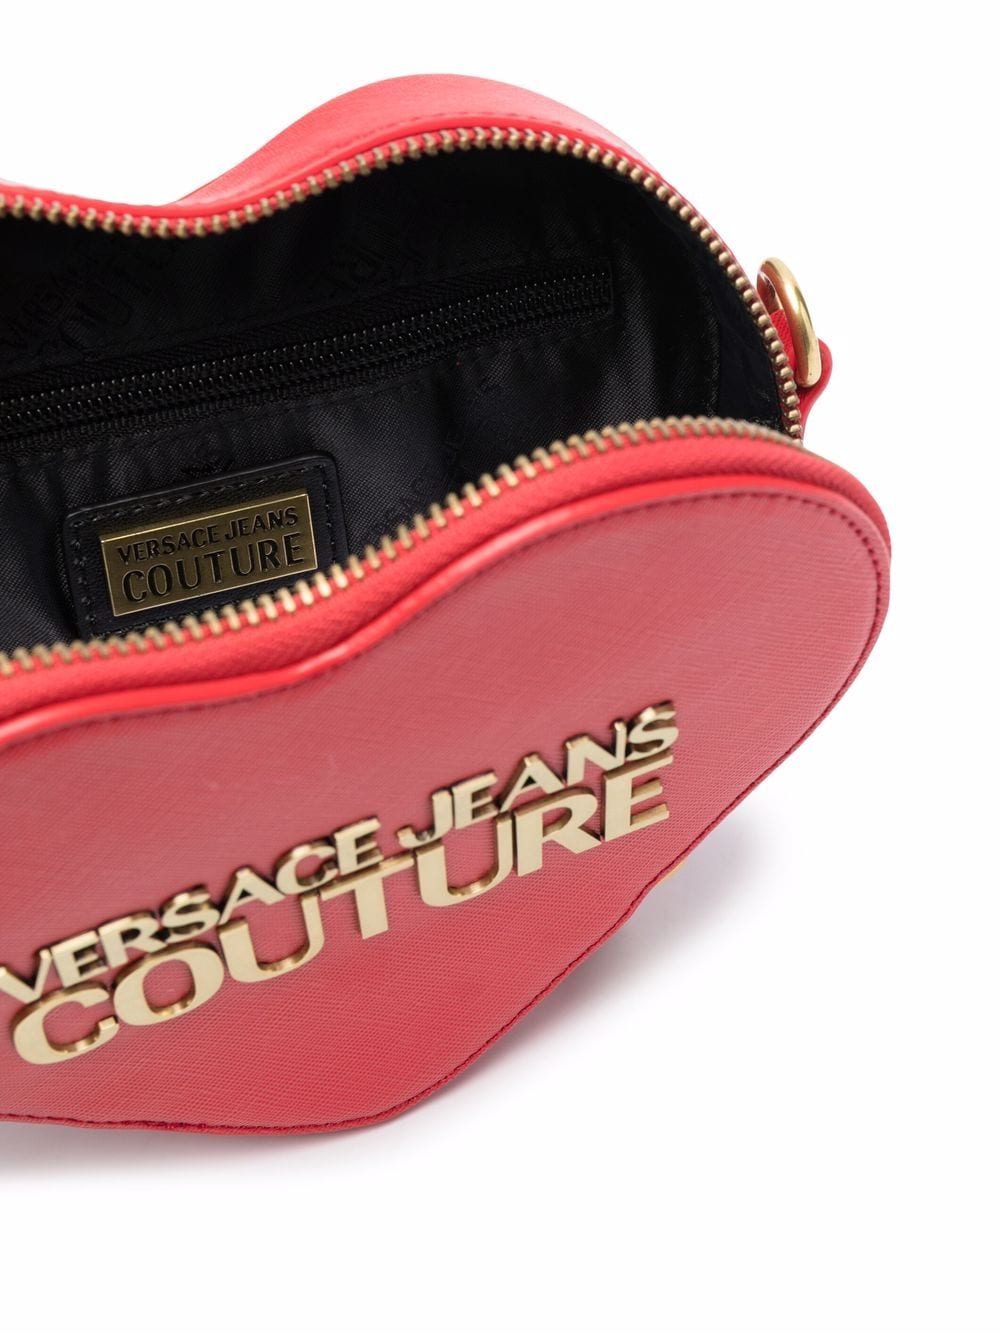 фото Versace jeans couture сумка через плечо с логотипом